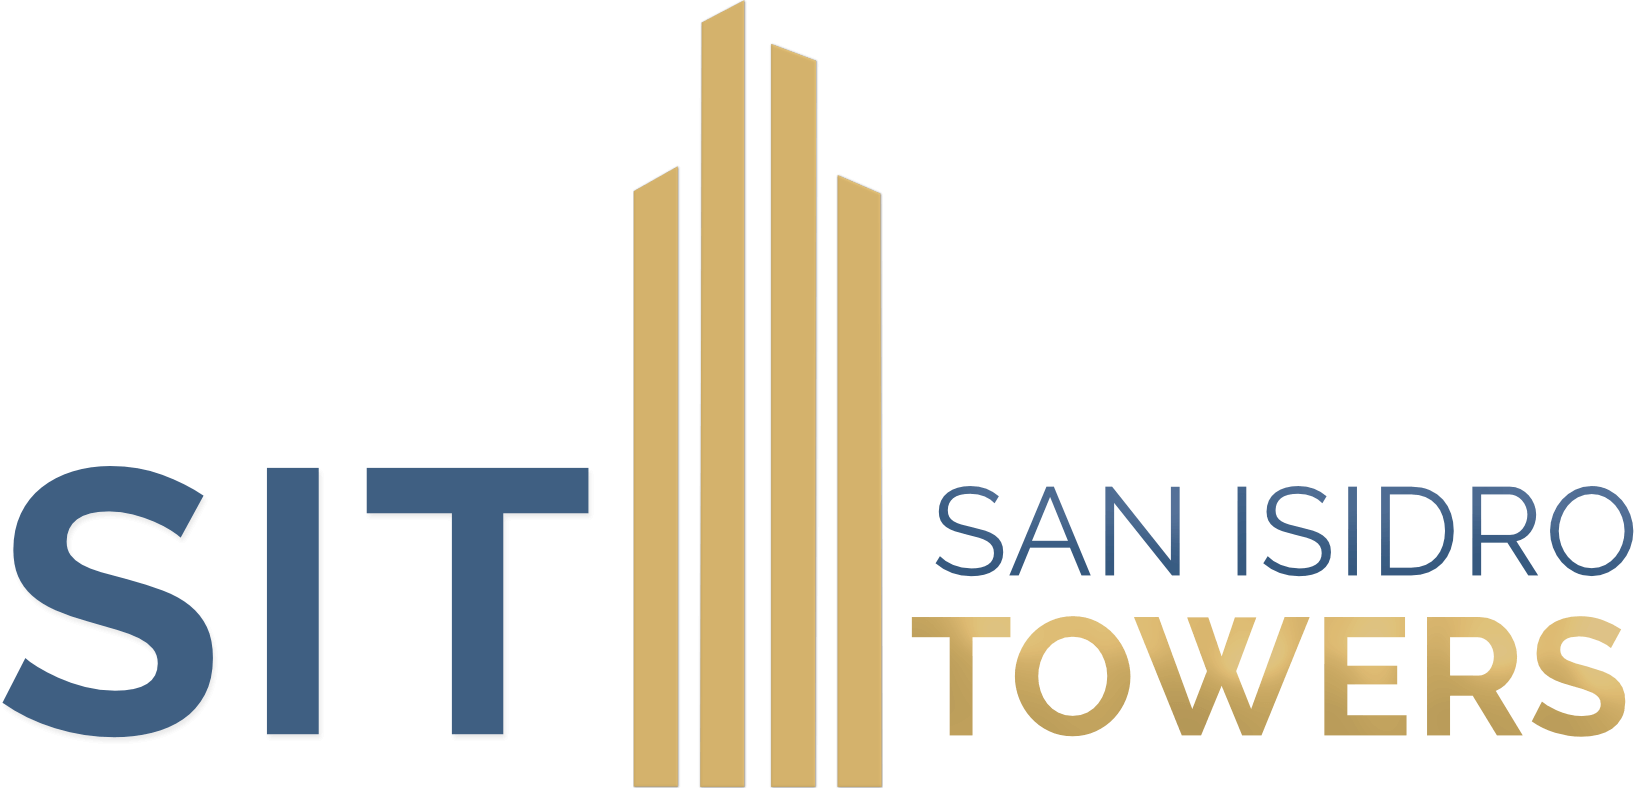 San Isidro Towers